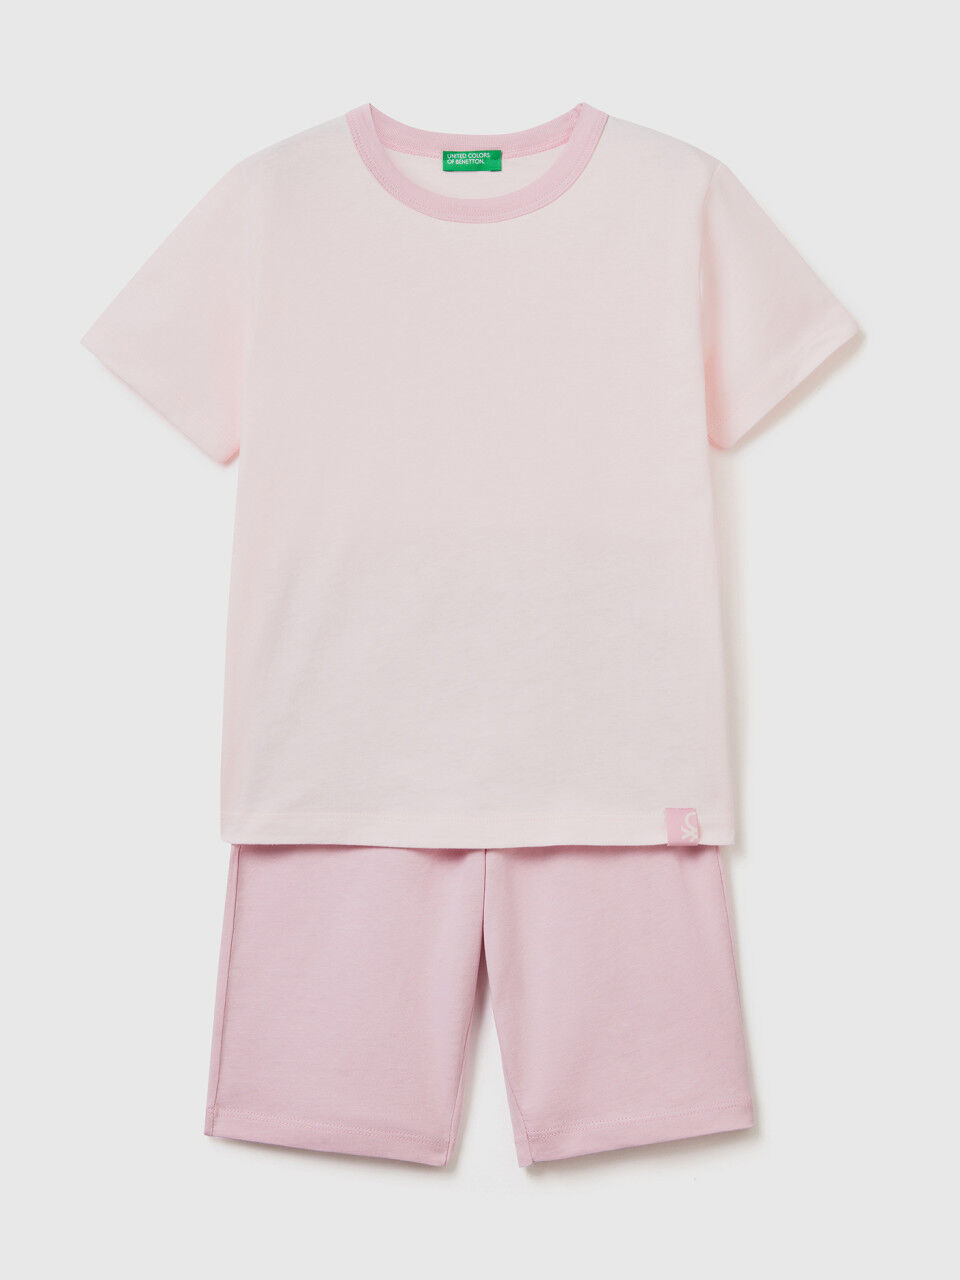 Short pyjamas in lightweight cotton